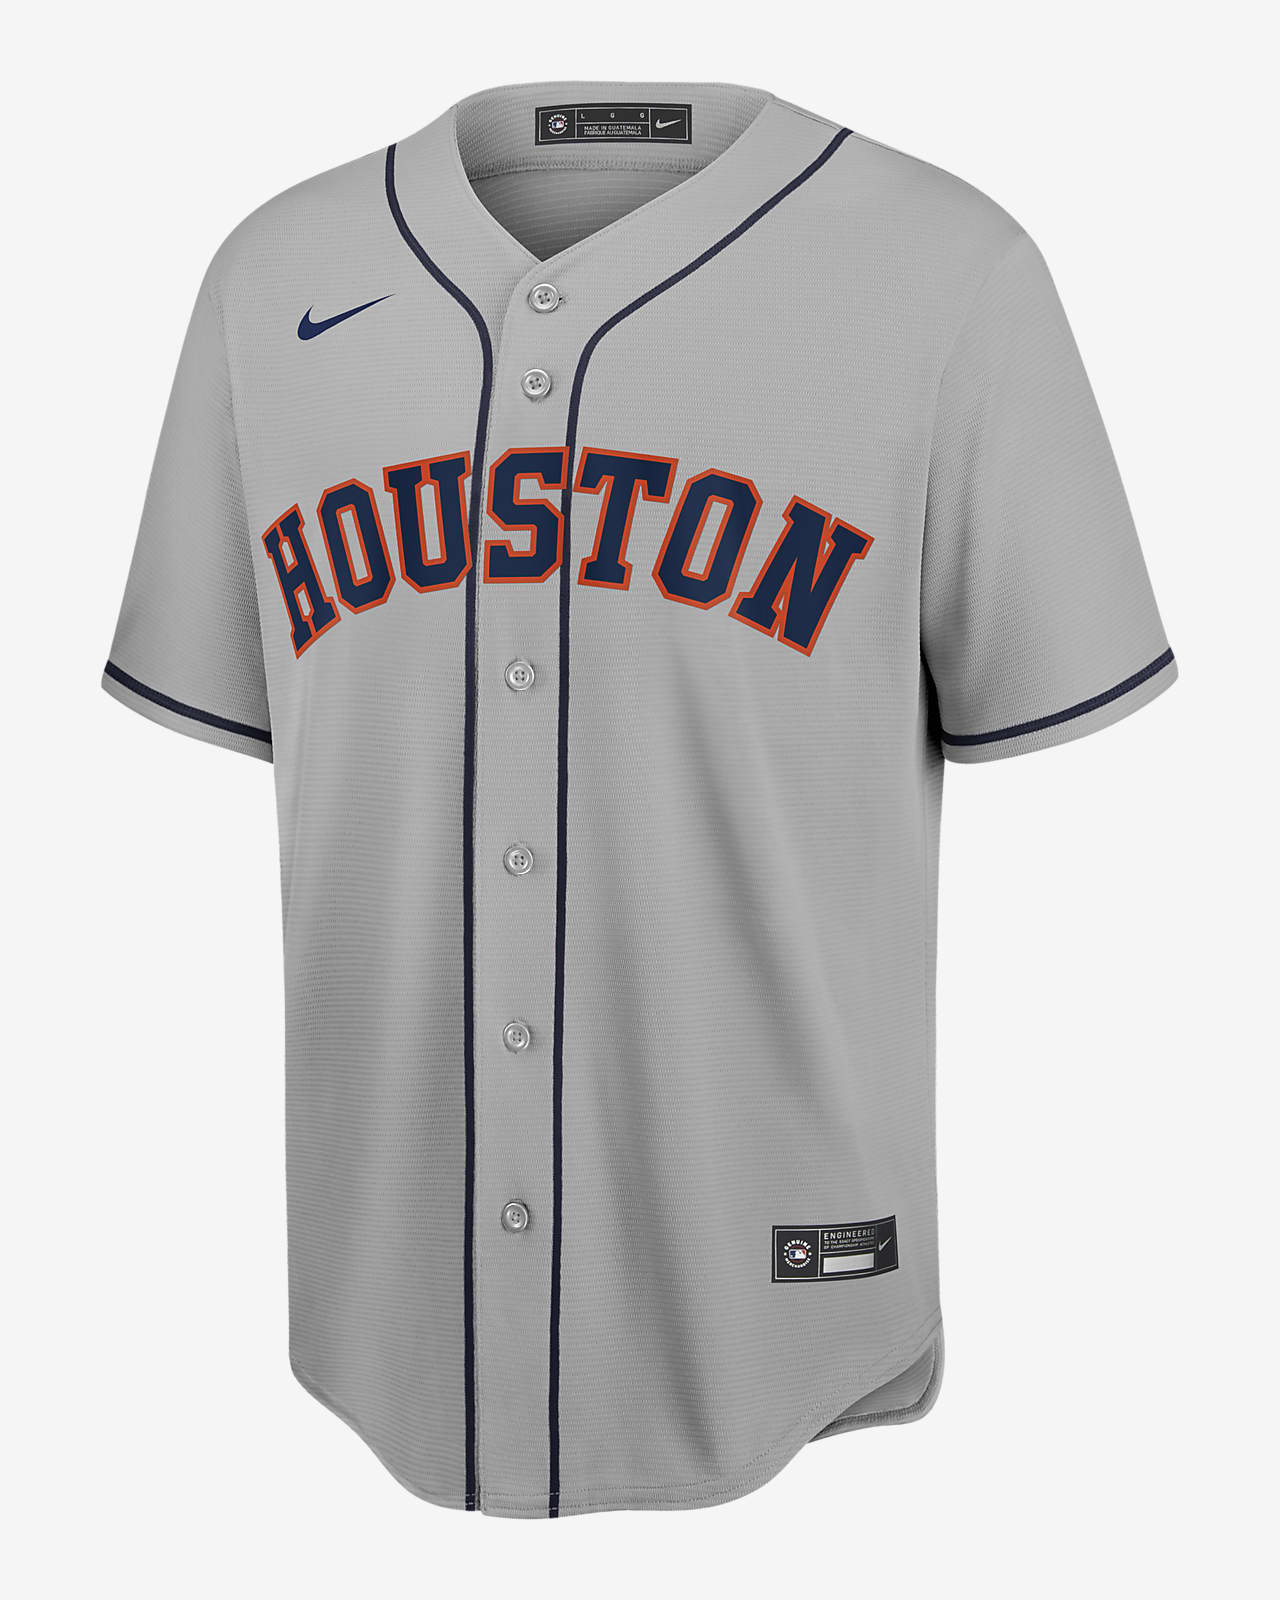 MLB Houston Astros Men's Replica Baseball Jersey